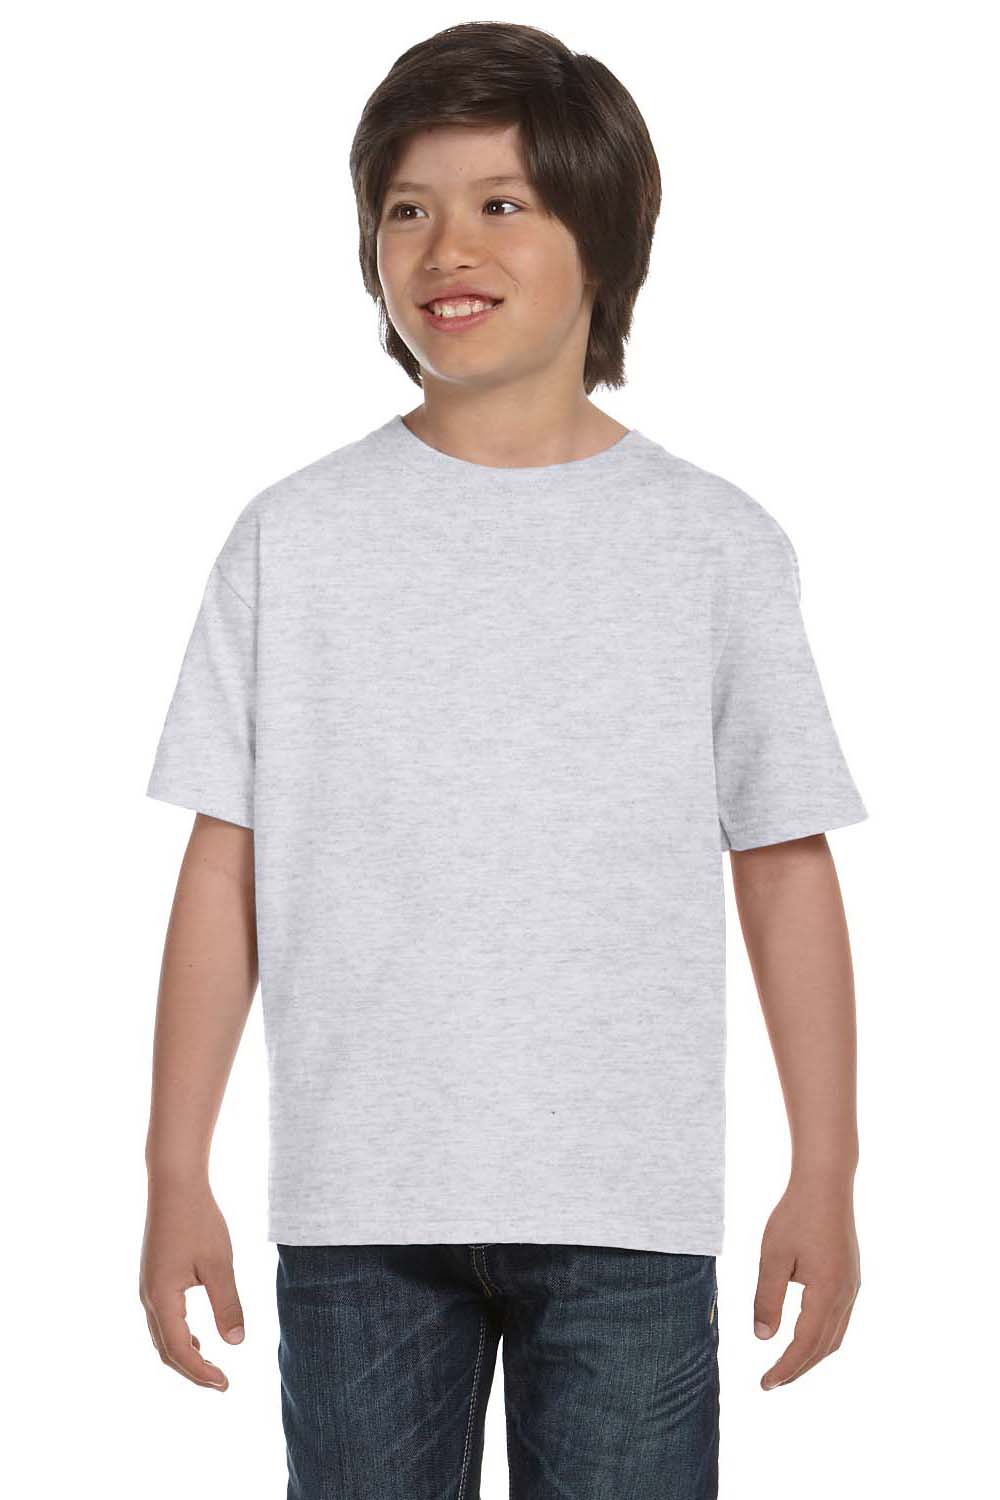 Hanes 5380 Youth Beefy-T Short Sleeve Crewneck T-Shirt Ash Grey Front